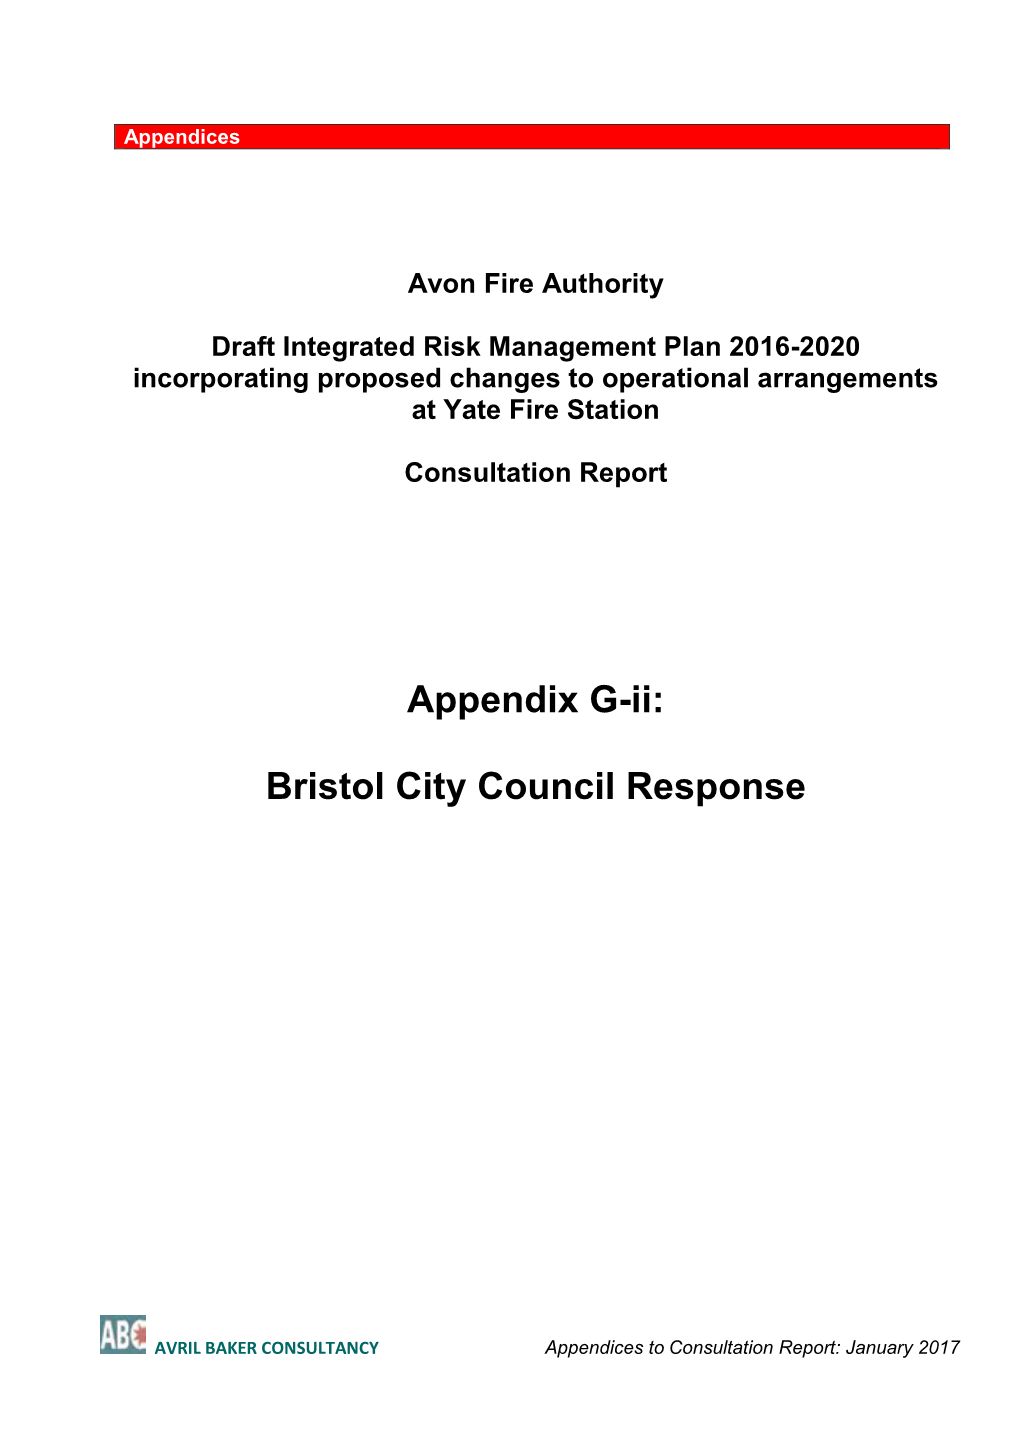 Bristol City Council Response